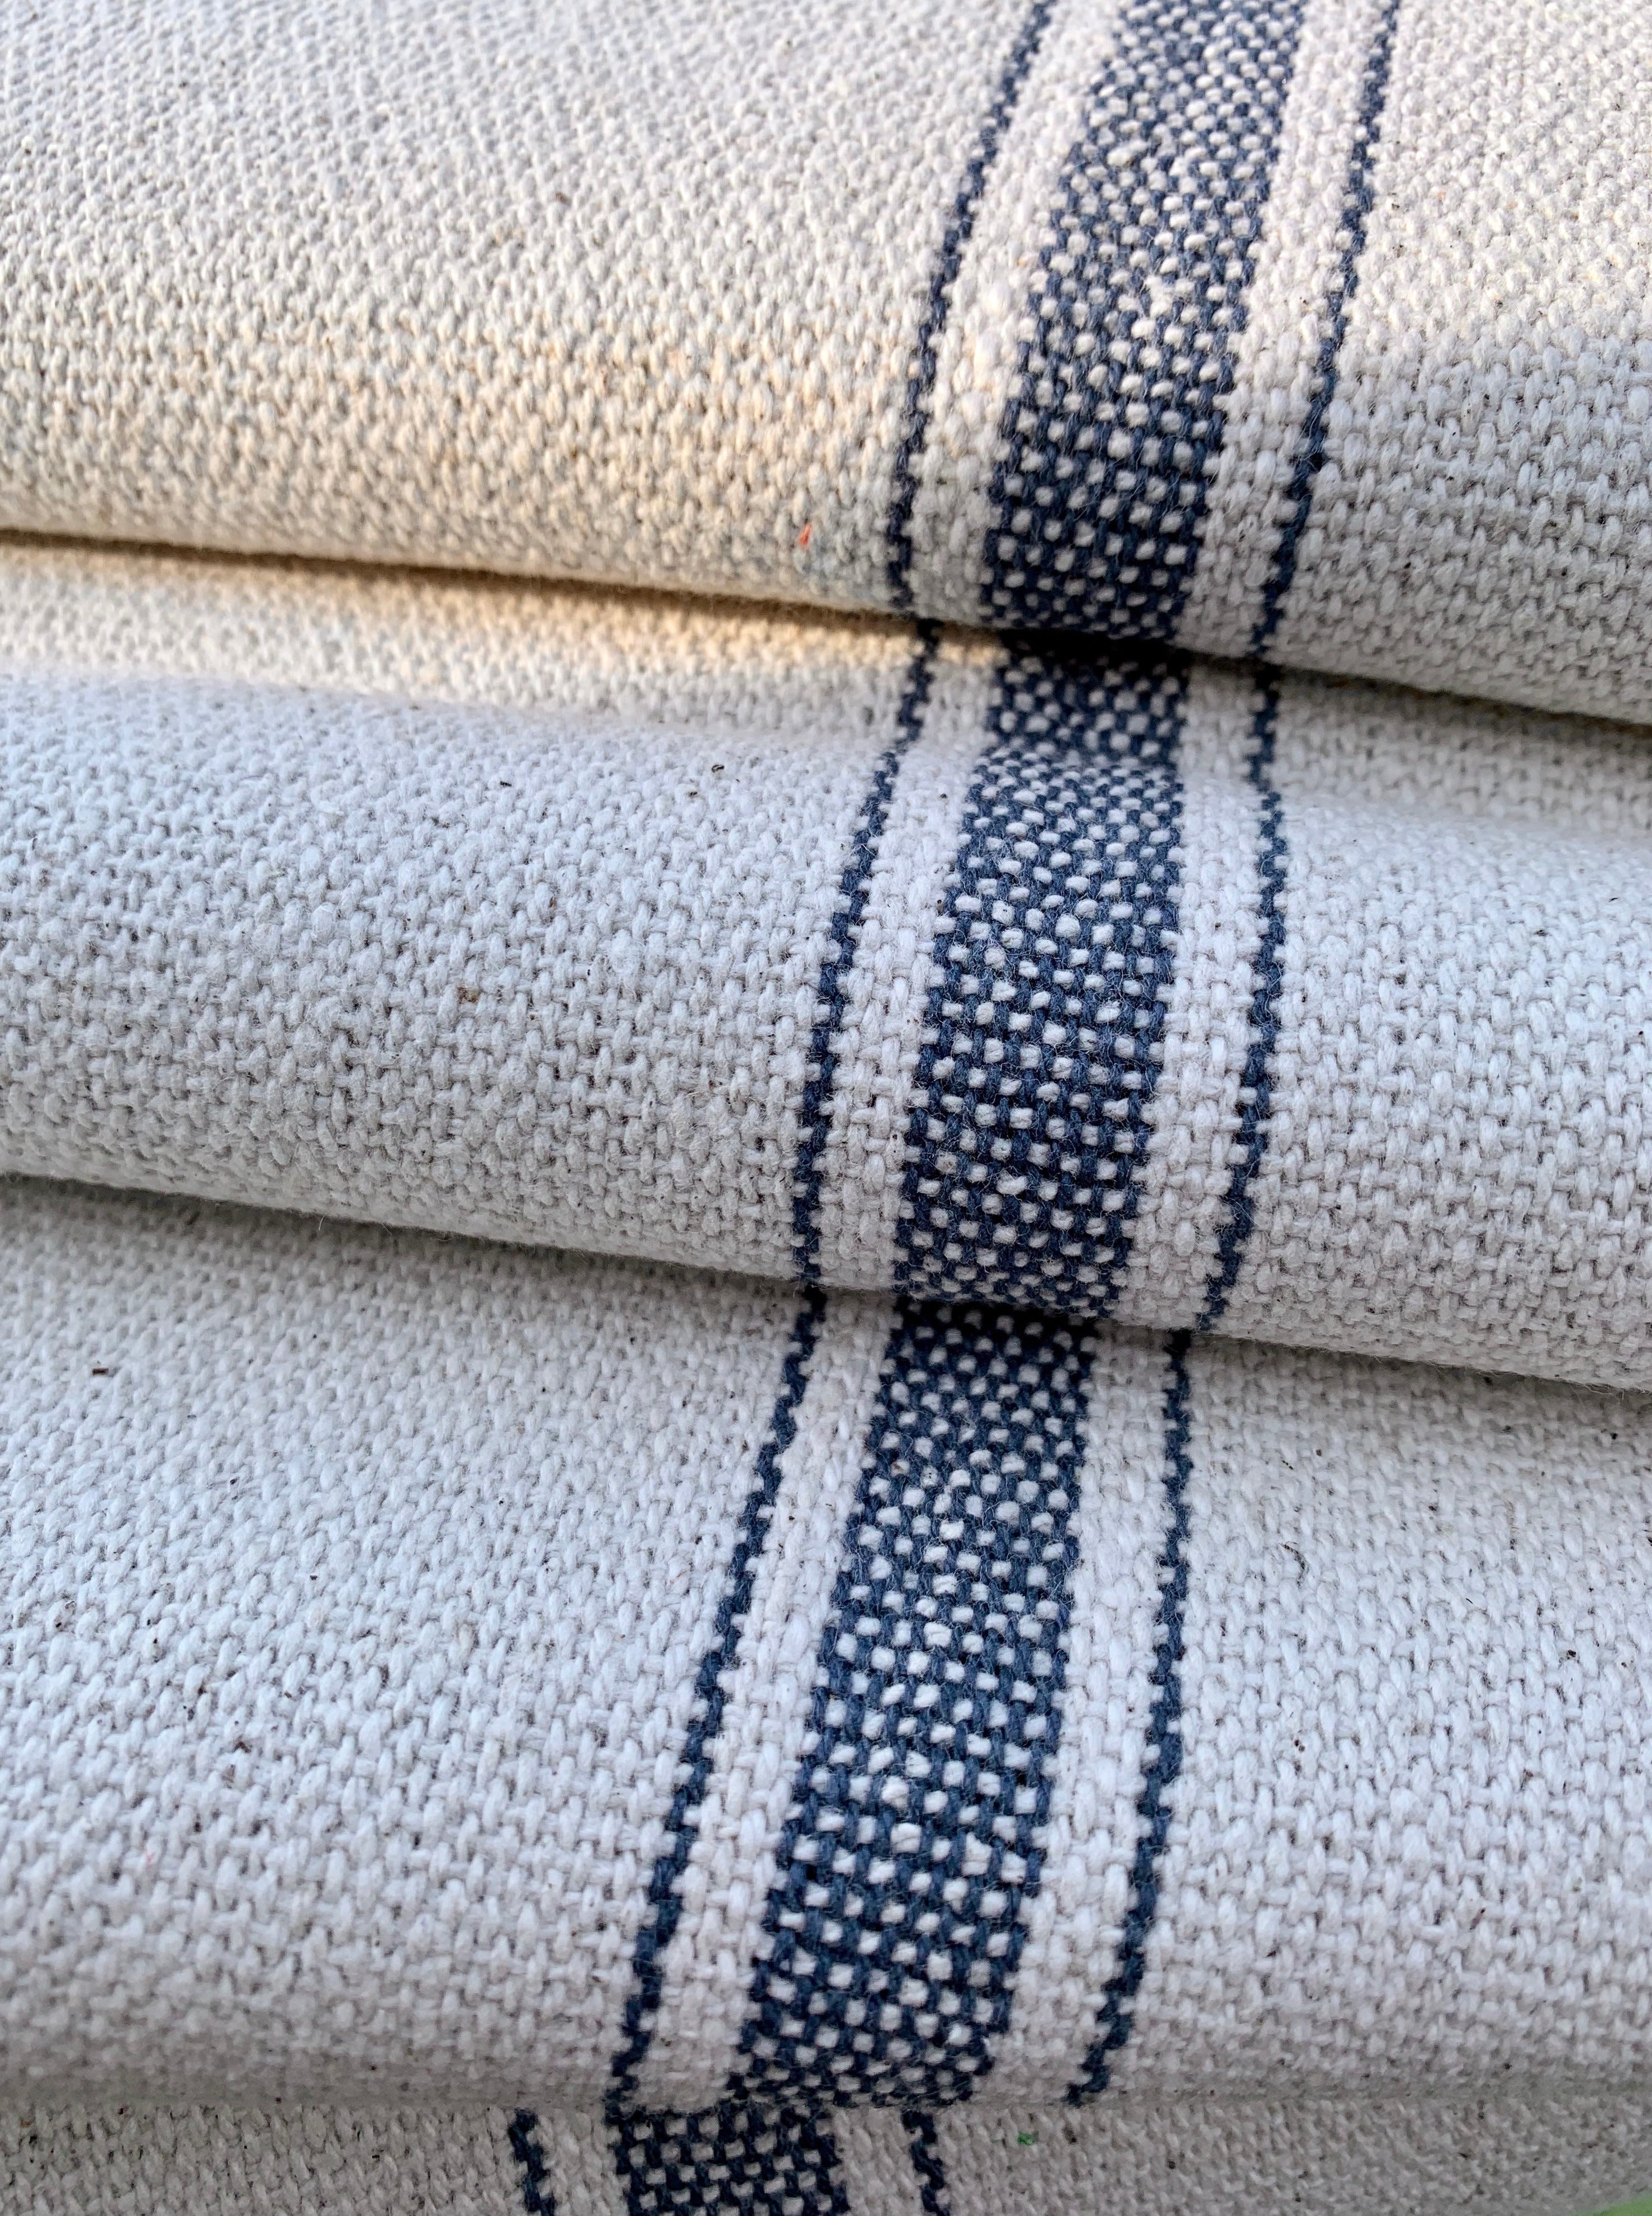 Blue Stripes on Cream Background - Grain Sack Fabric